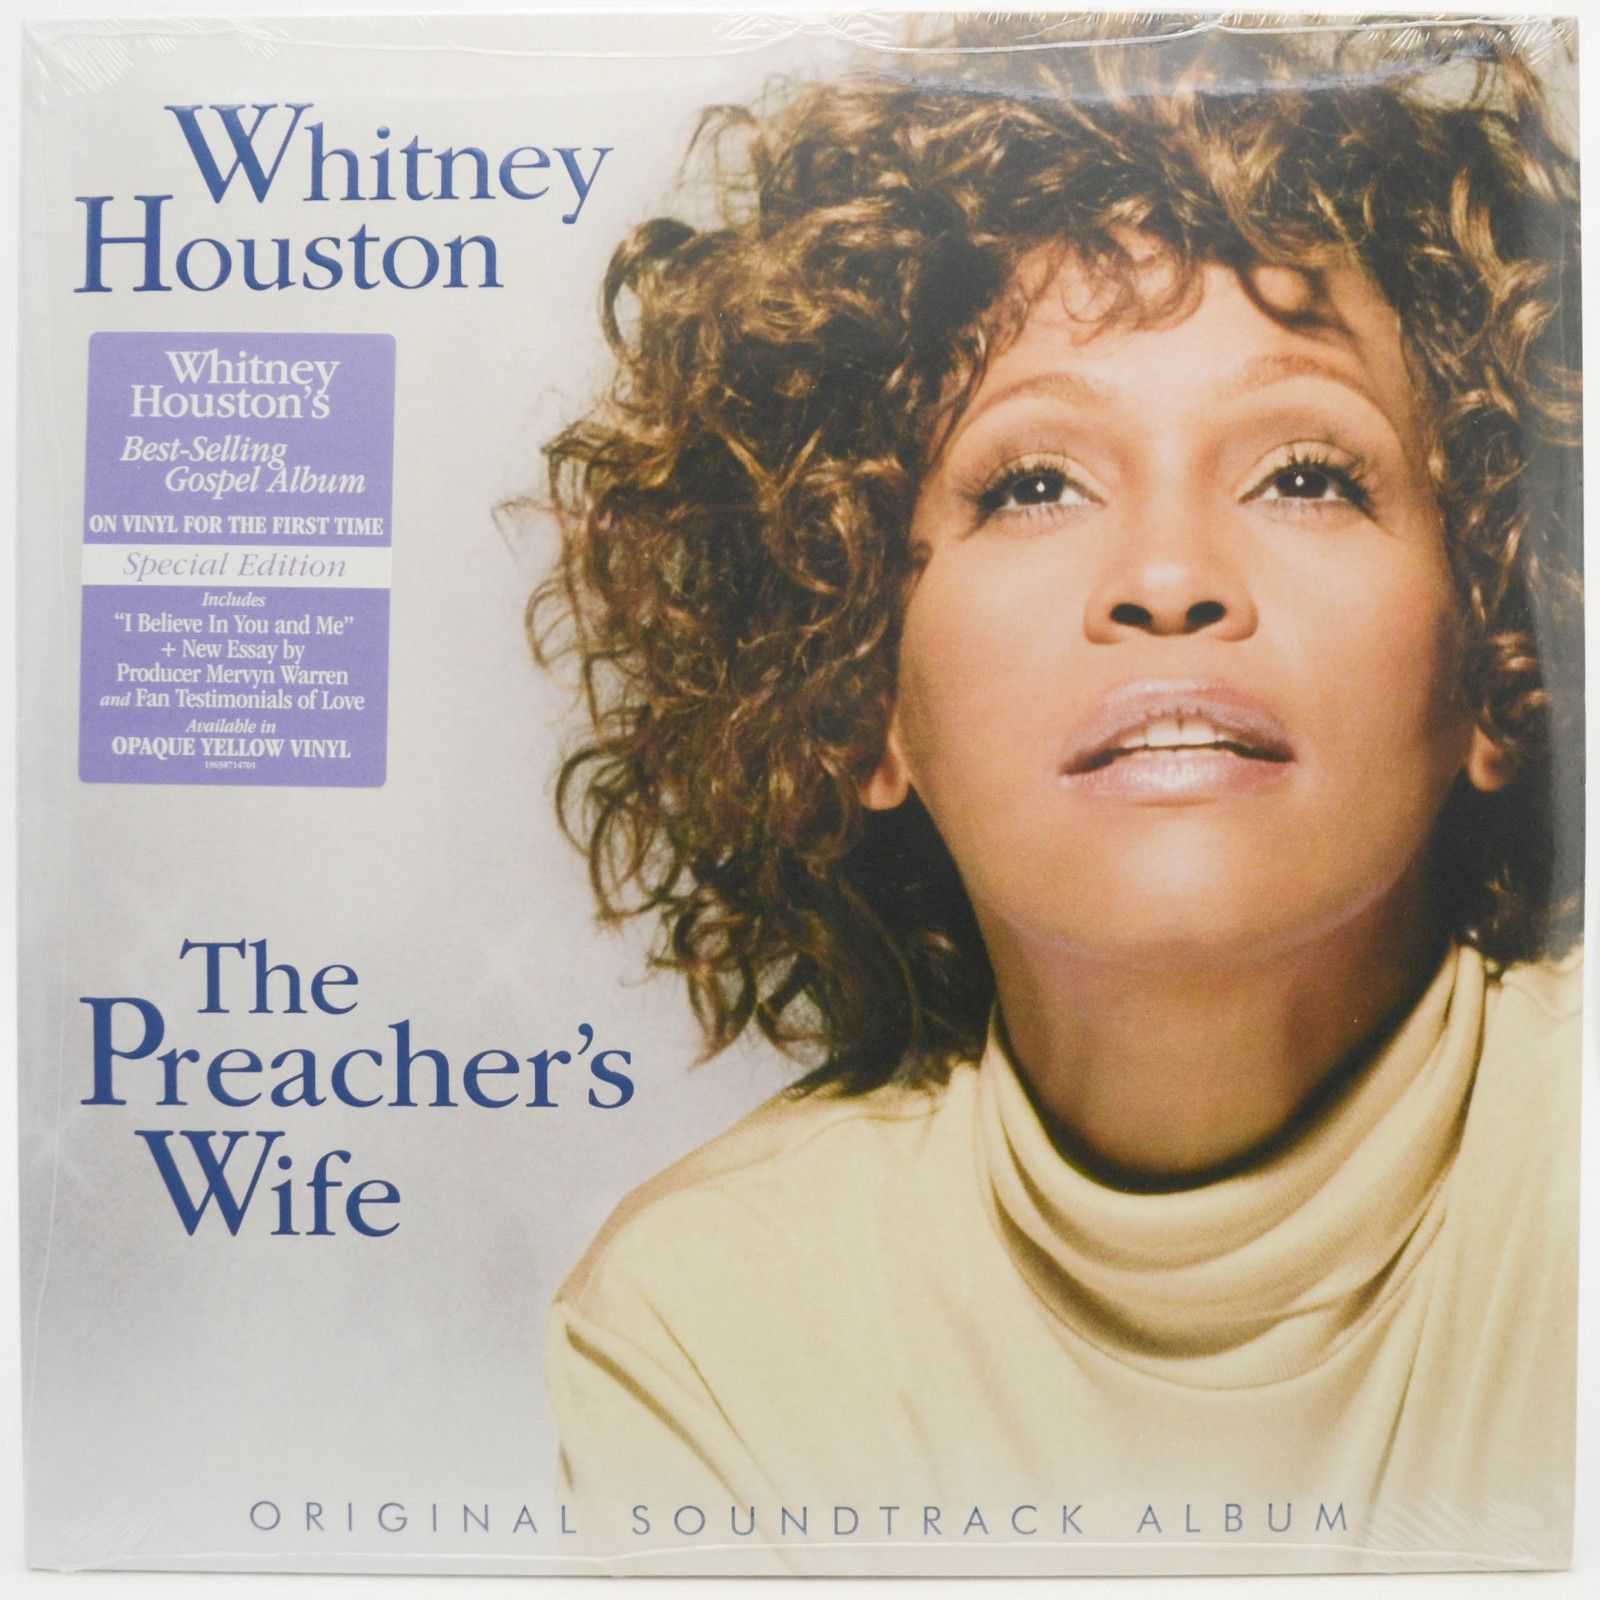 Whitney Houston — The Preacher's Wife (Original Soundtrack Album) (2LP), 1996